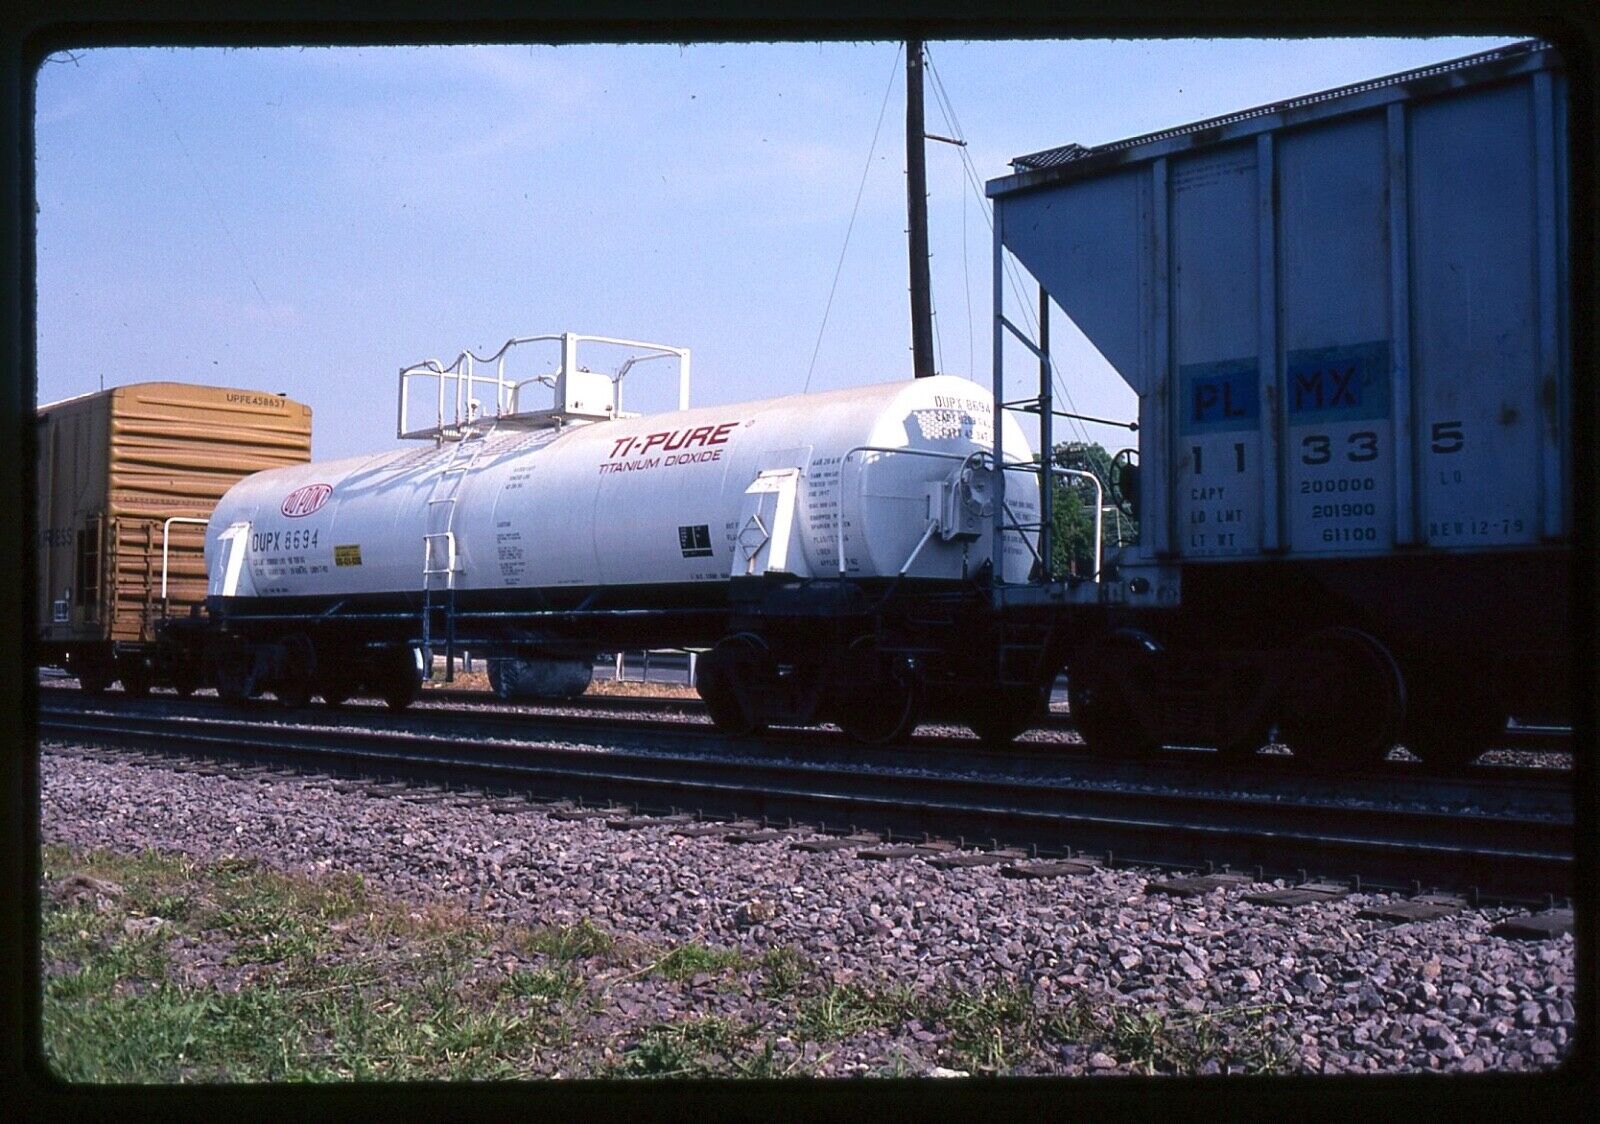 Railroad Slide - DUPX #8694 Dupont Tank Car 1989 Ti-Pure Titanium Dioxide Train